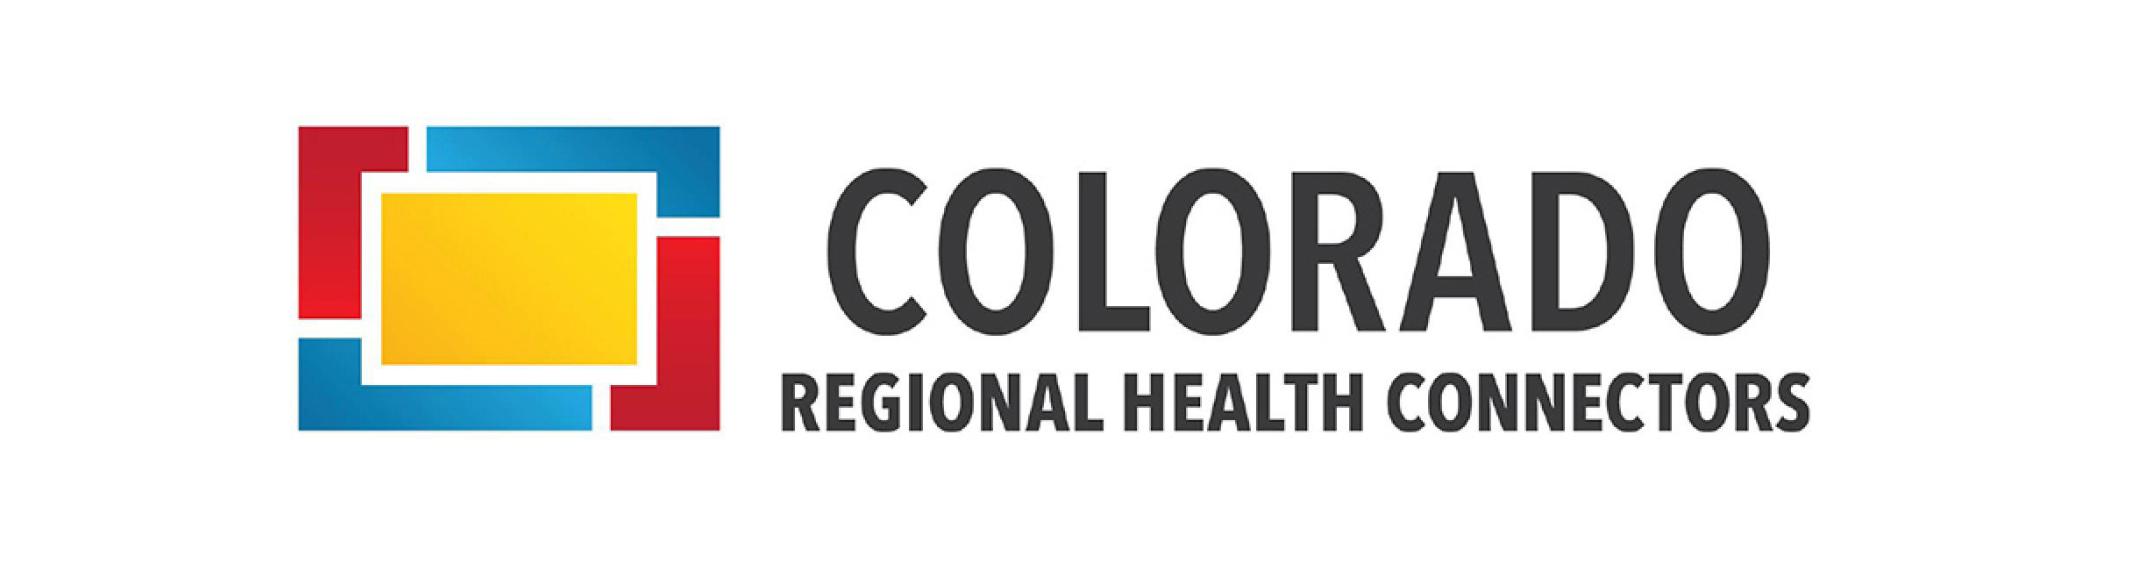 Regional Health Connectors logo